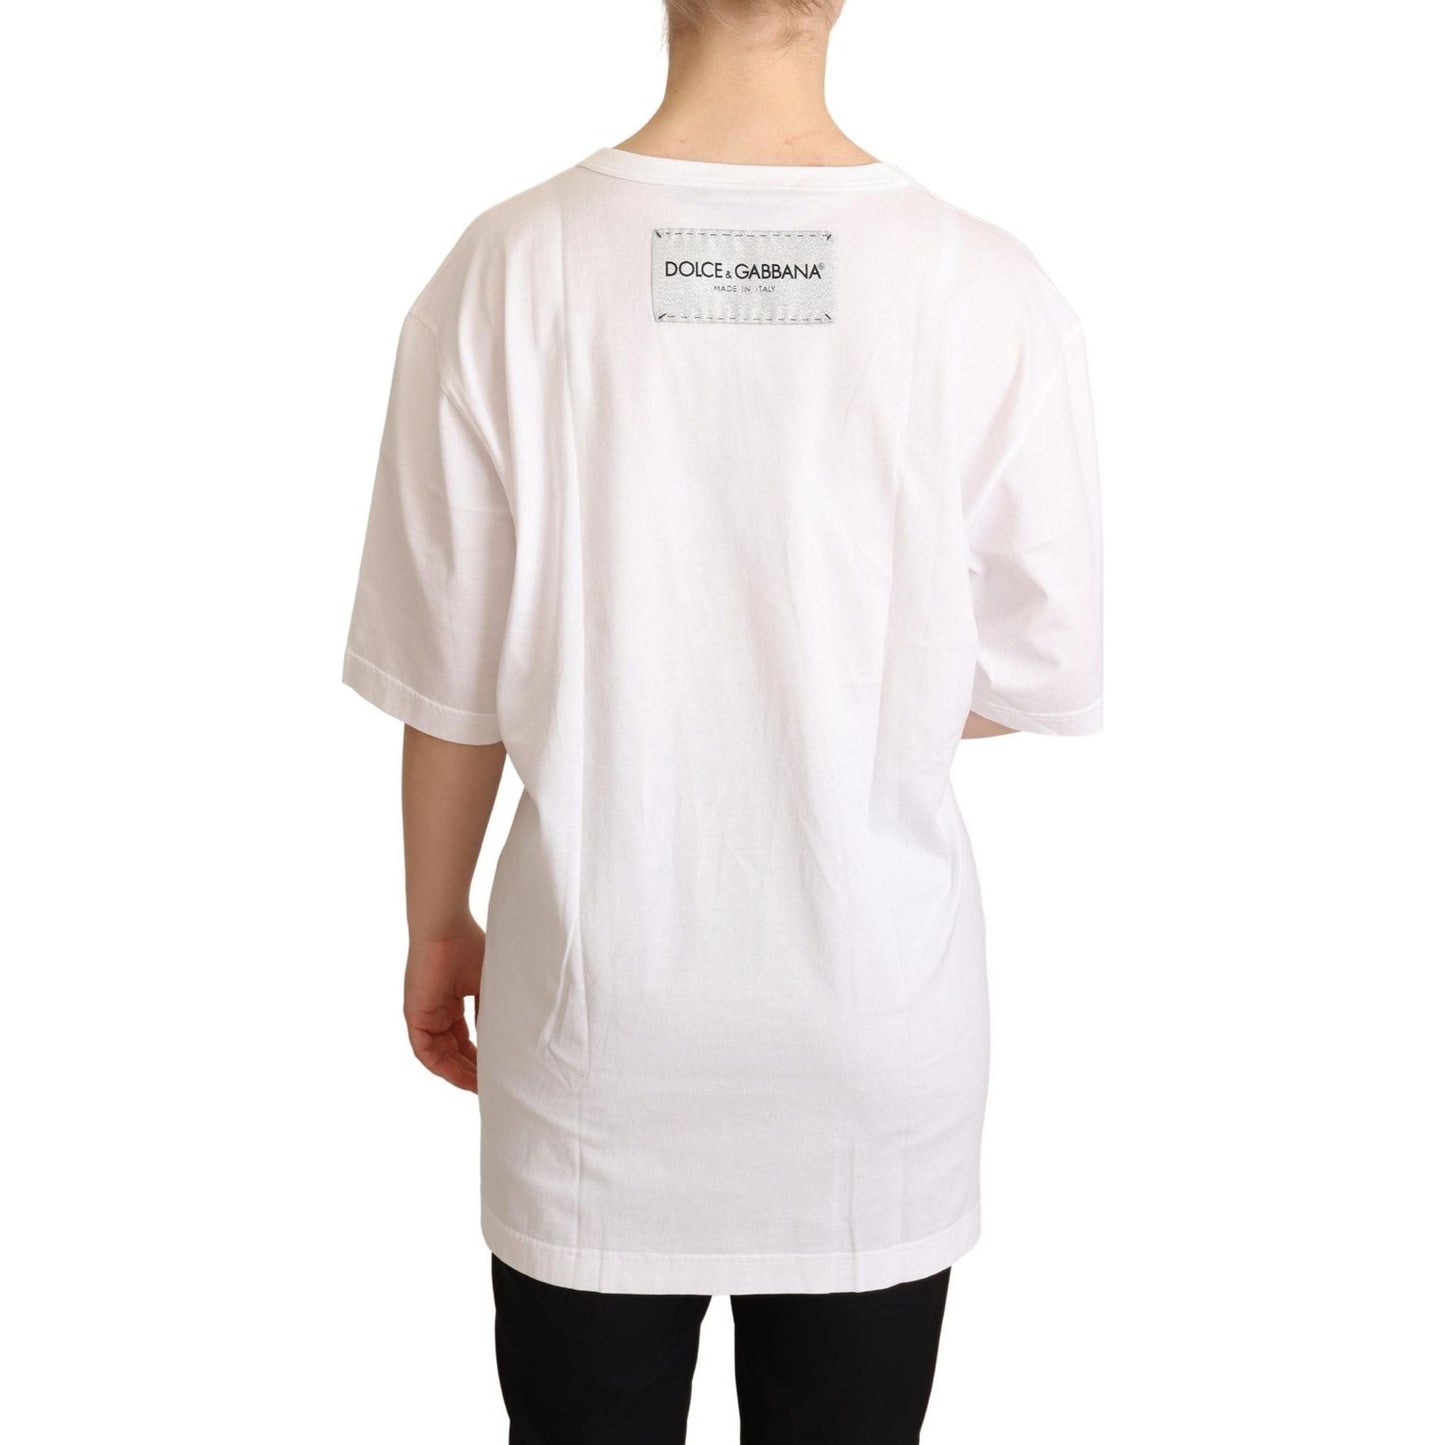 Dolce & Gabbana Elegant Motive Print Crewneck T-shirt WOMAN T-SHIRTS white-cotton-bellezza-motive-top-t-shirt IMG_9575-scaled-4782c52b-c5b.jpg